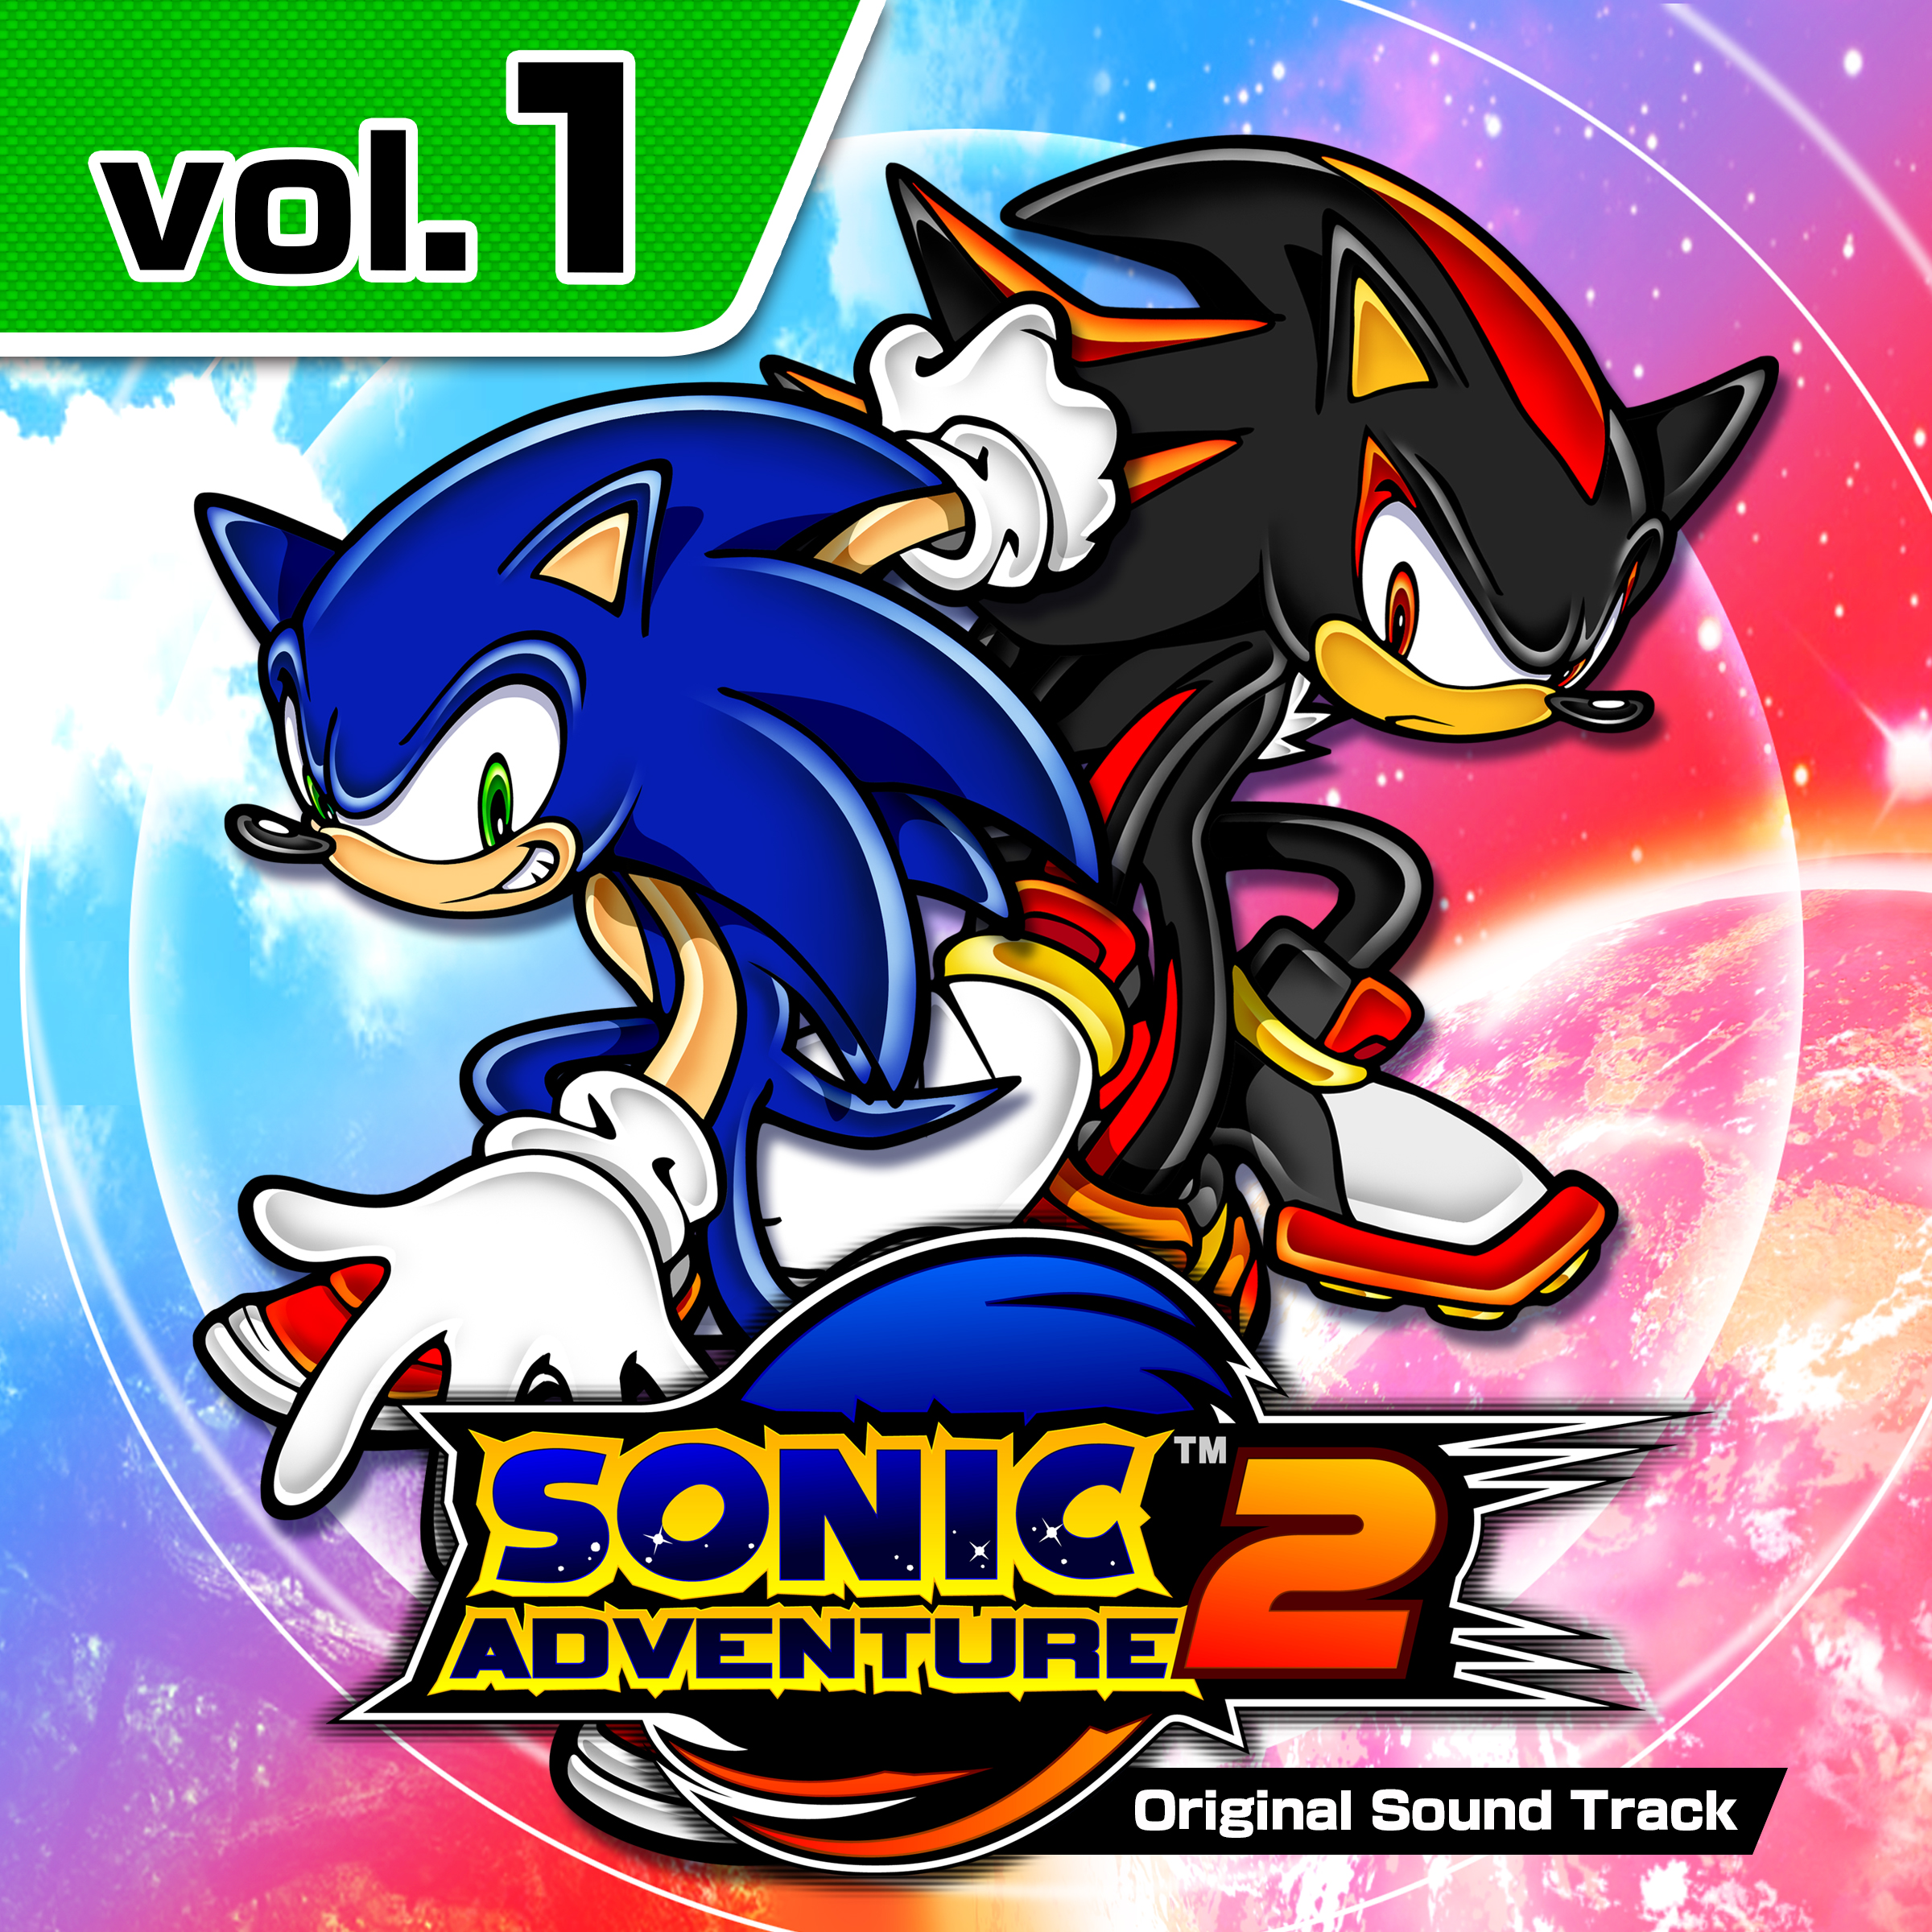 Multi-Dimensional Sonic Adventure 2 Original Sound Track | Sonic 